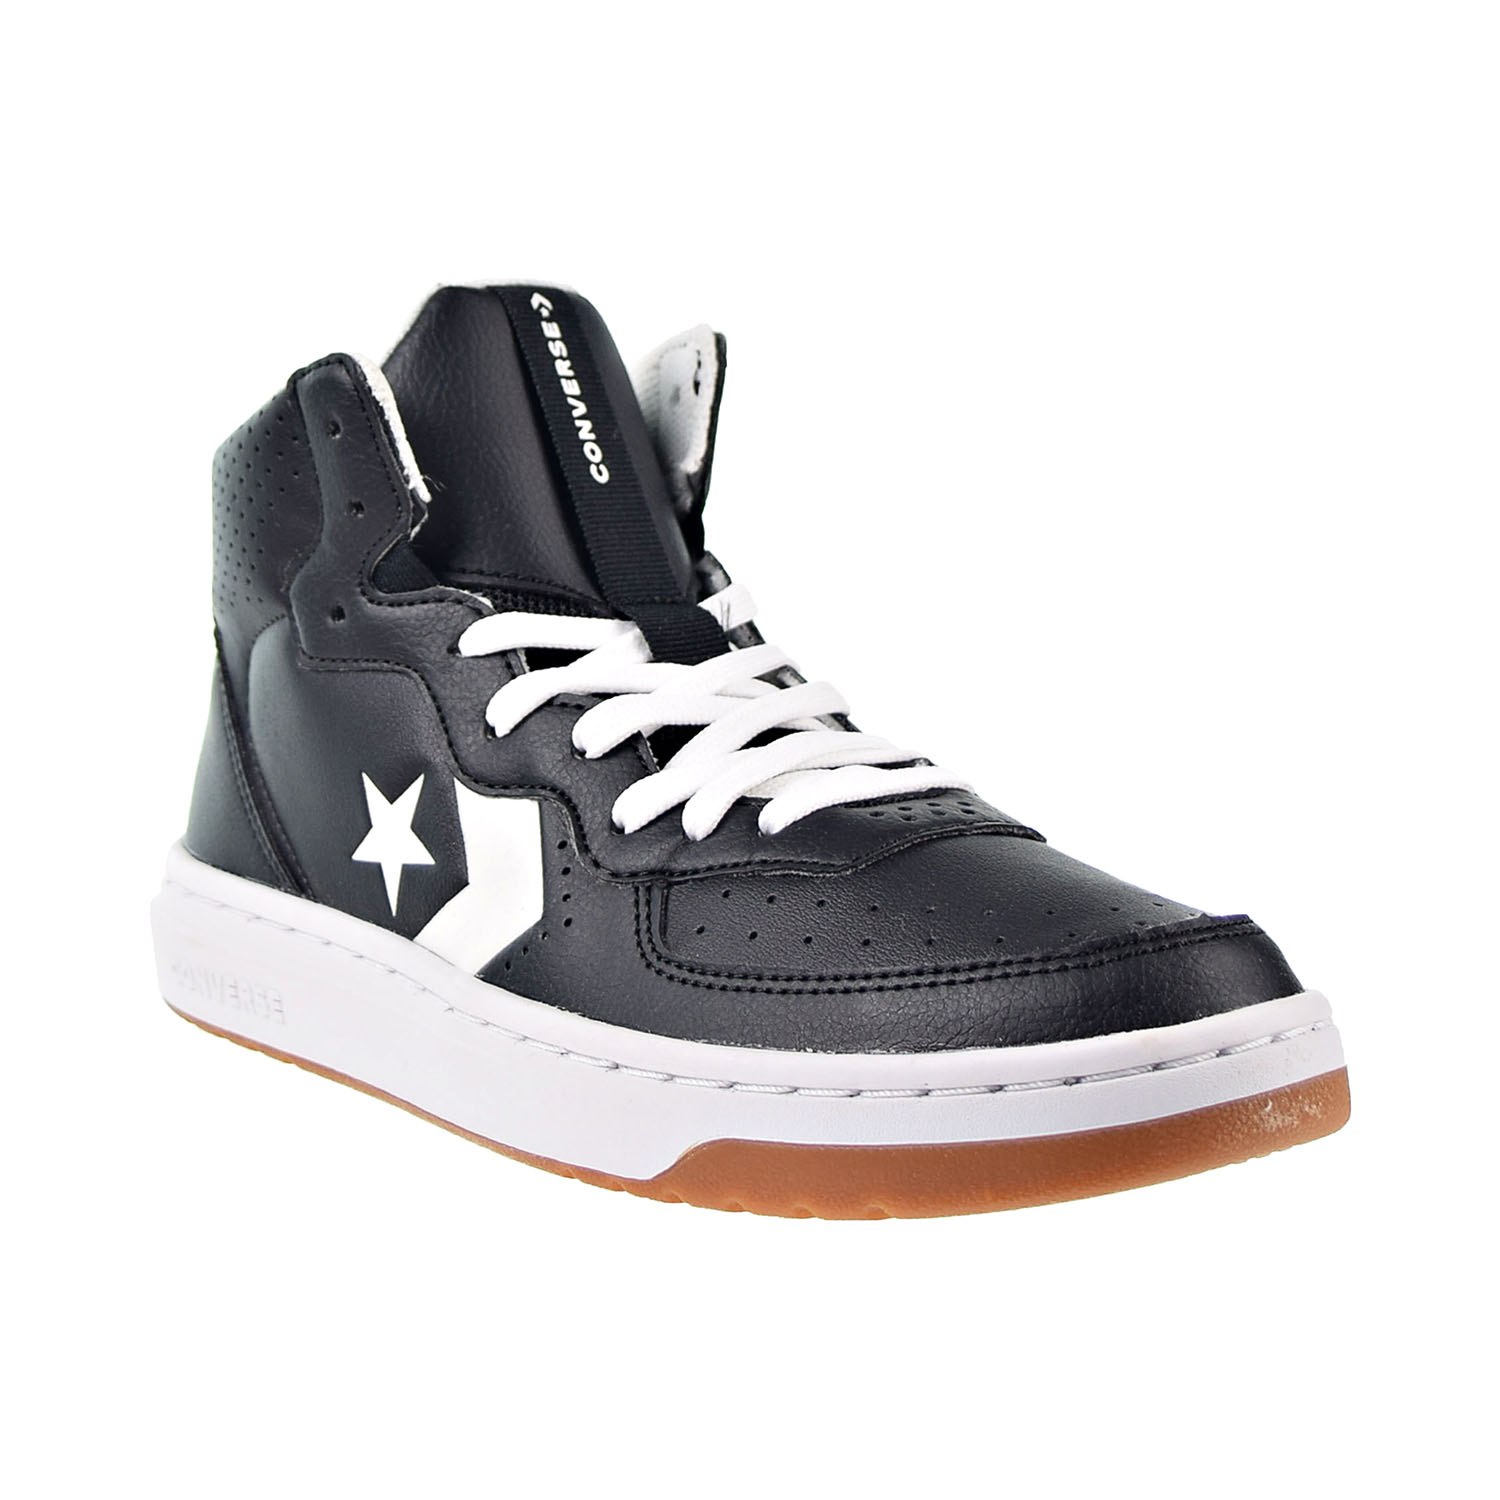 Converse Rival Mid Men's Shoes Black-White 164891c - image 2 of 6